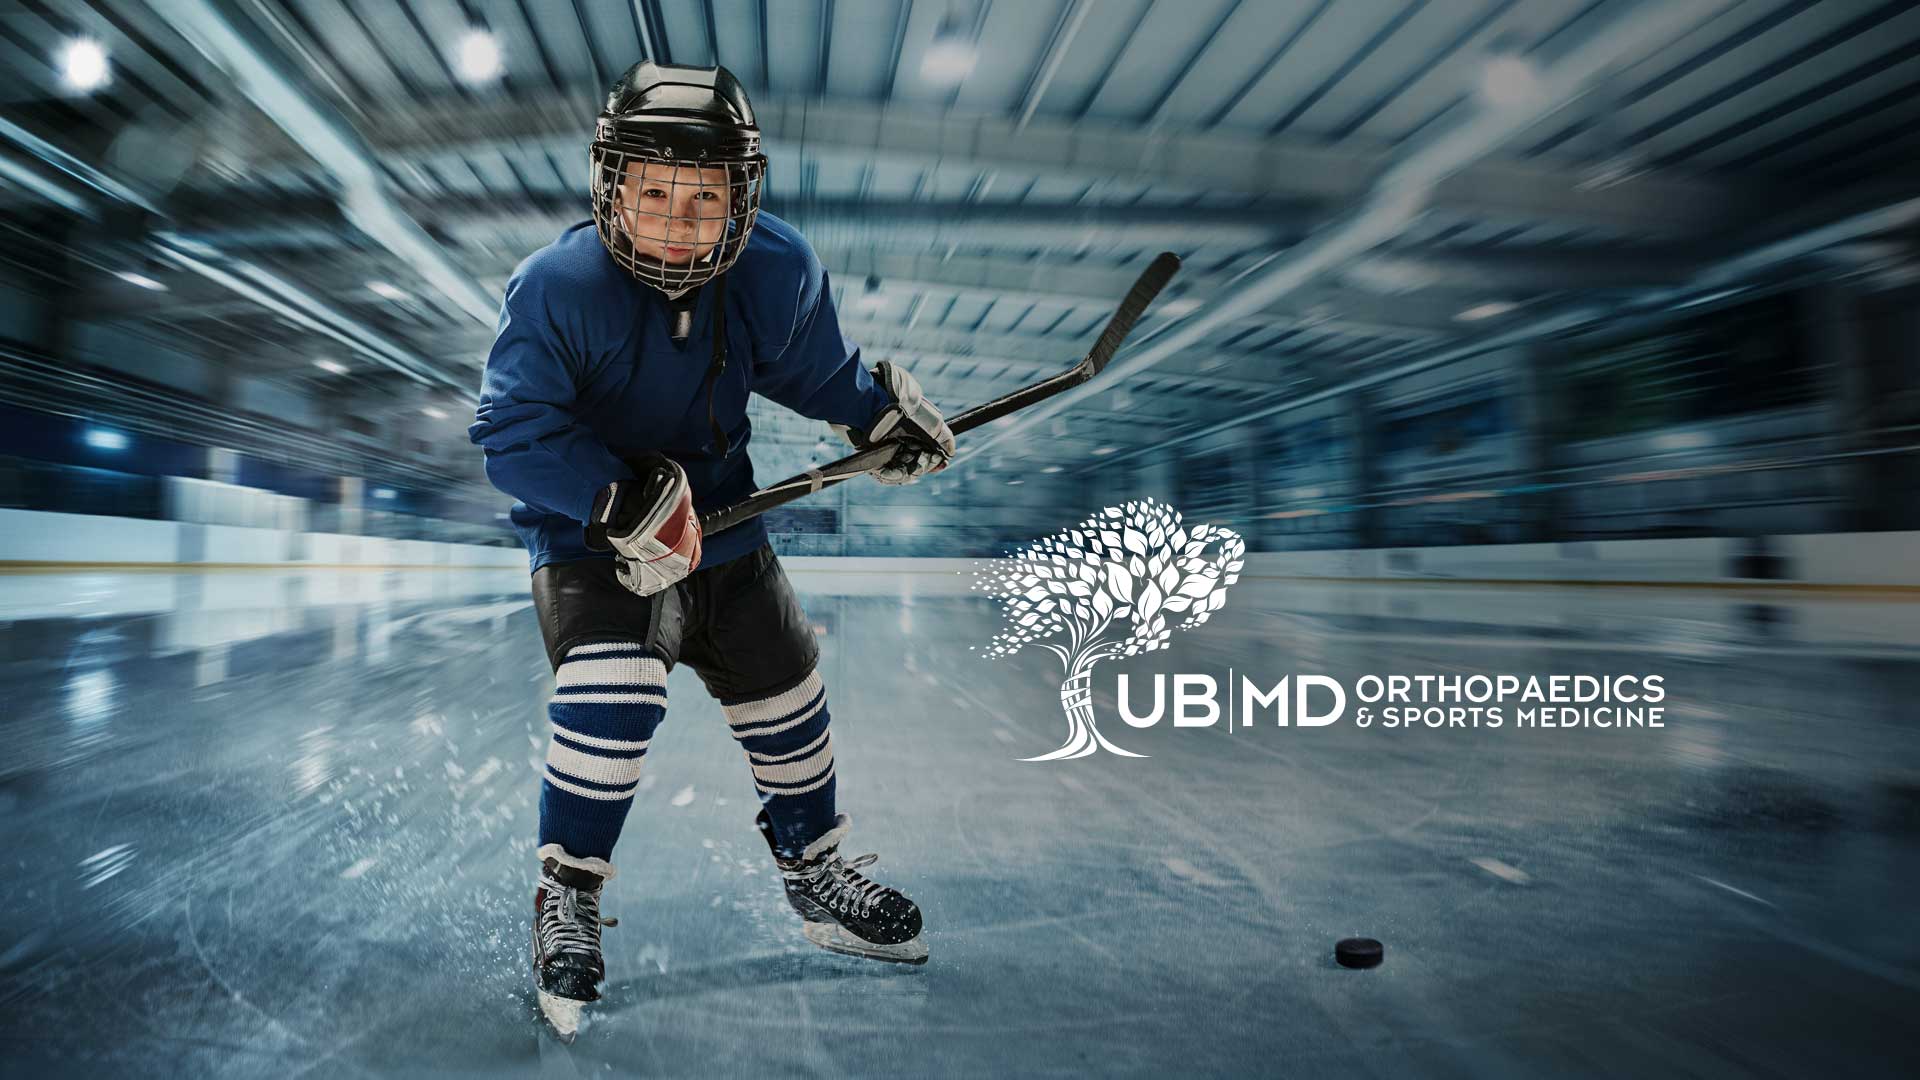 UBMD Orthopaedics & Sports Medicine Digital Campaign